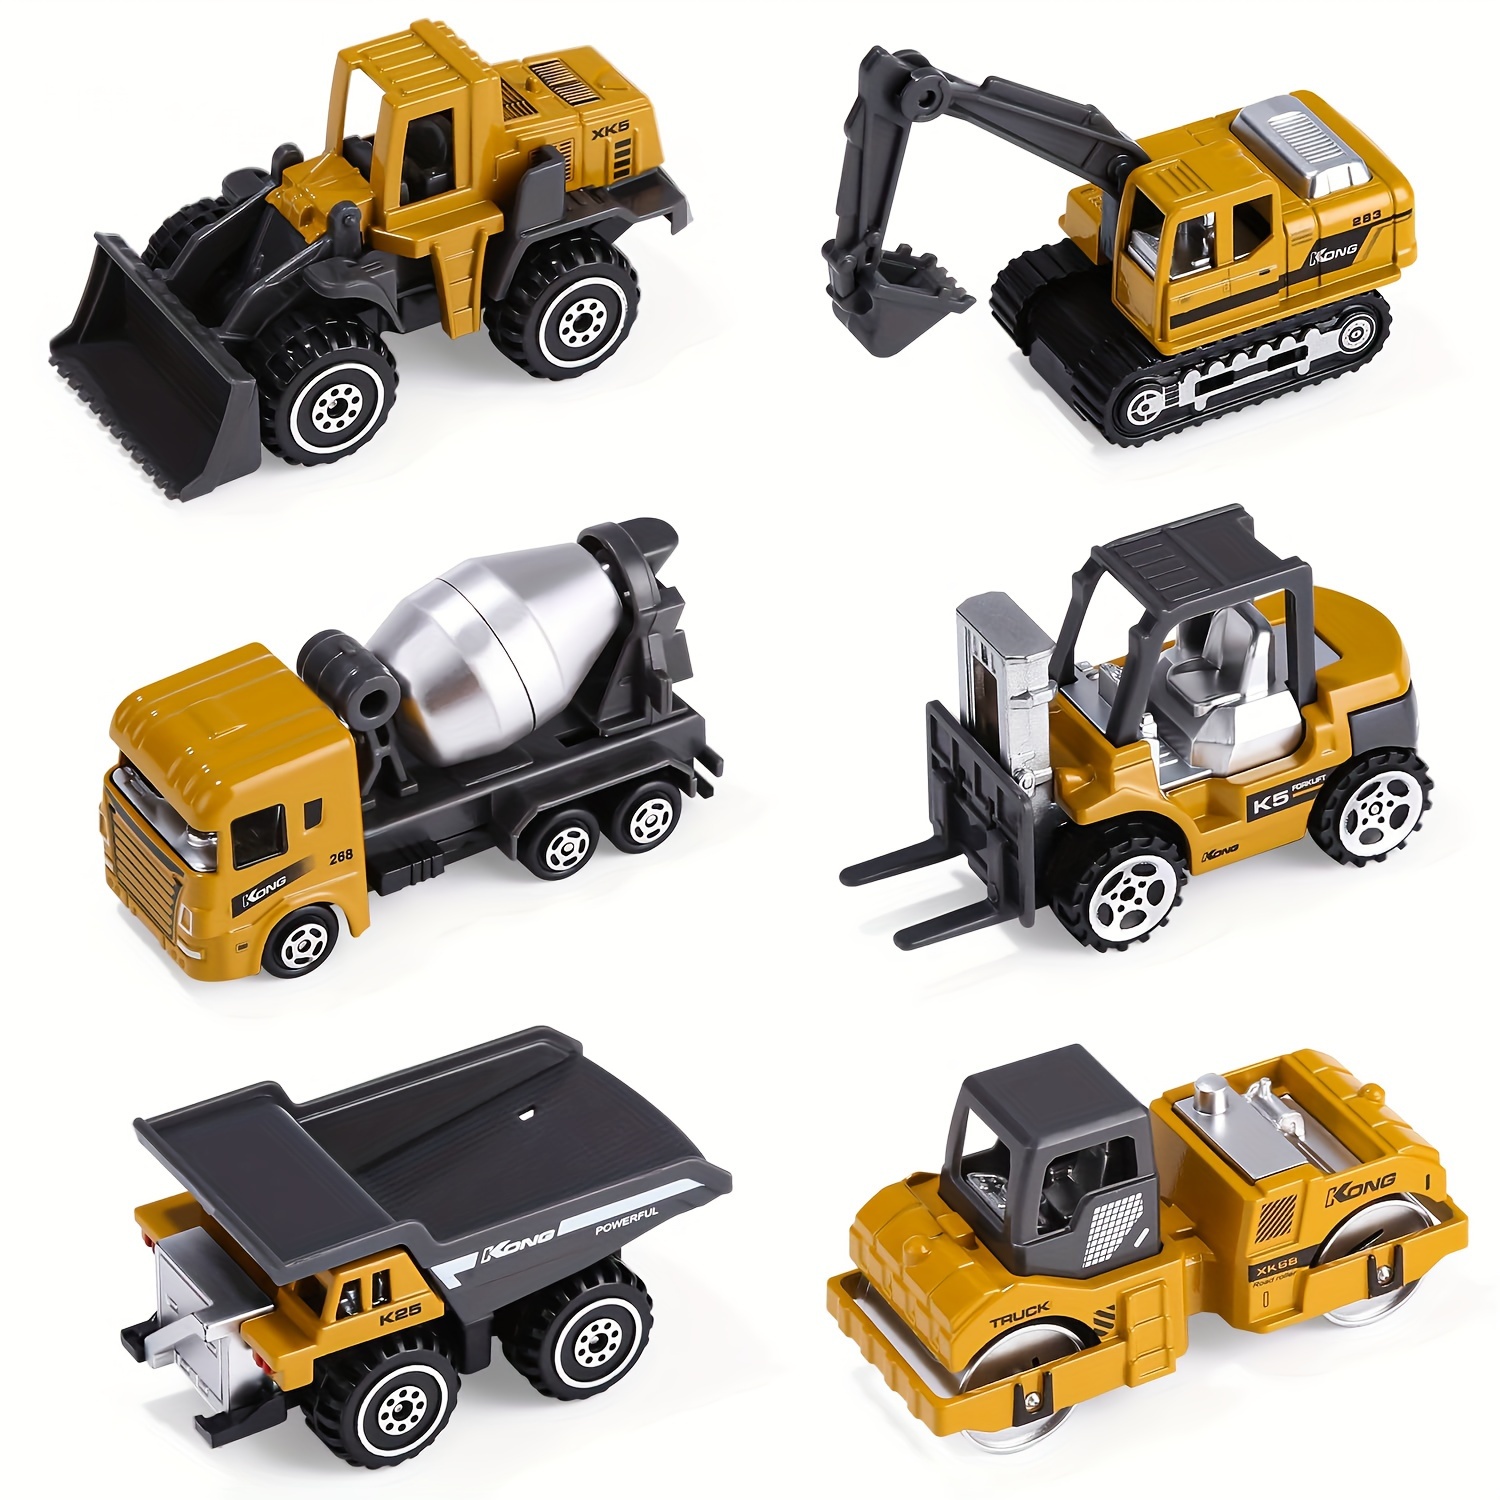 

6pcs Construction Site Vehicles Metal Plastic Excavator, Small Mini Engineering Vehicle Models Set